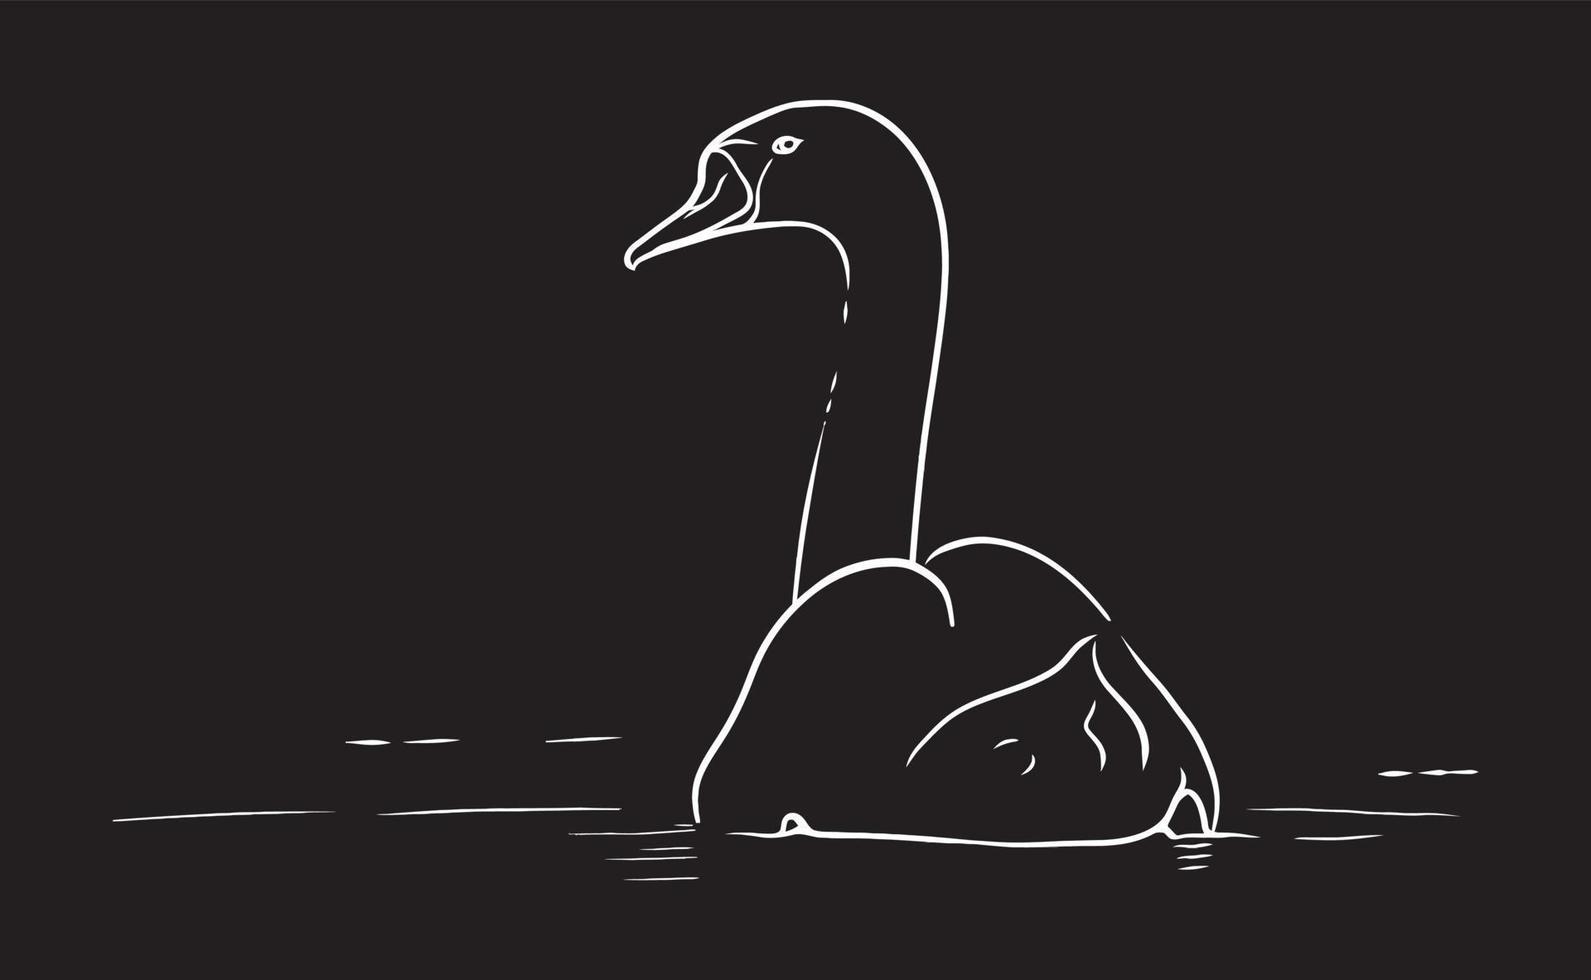 svan simmar lugnt i vattnet, vektor linjekonst illustration på svart bakgrund